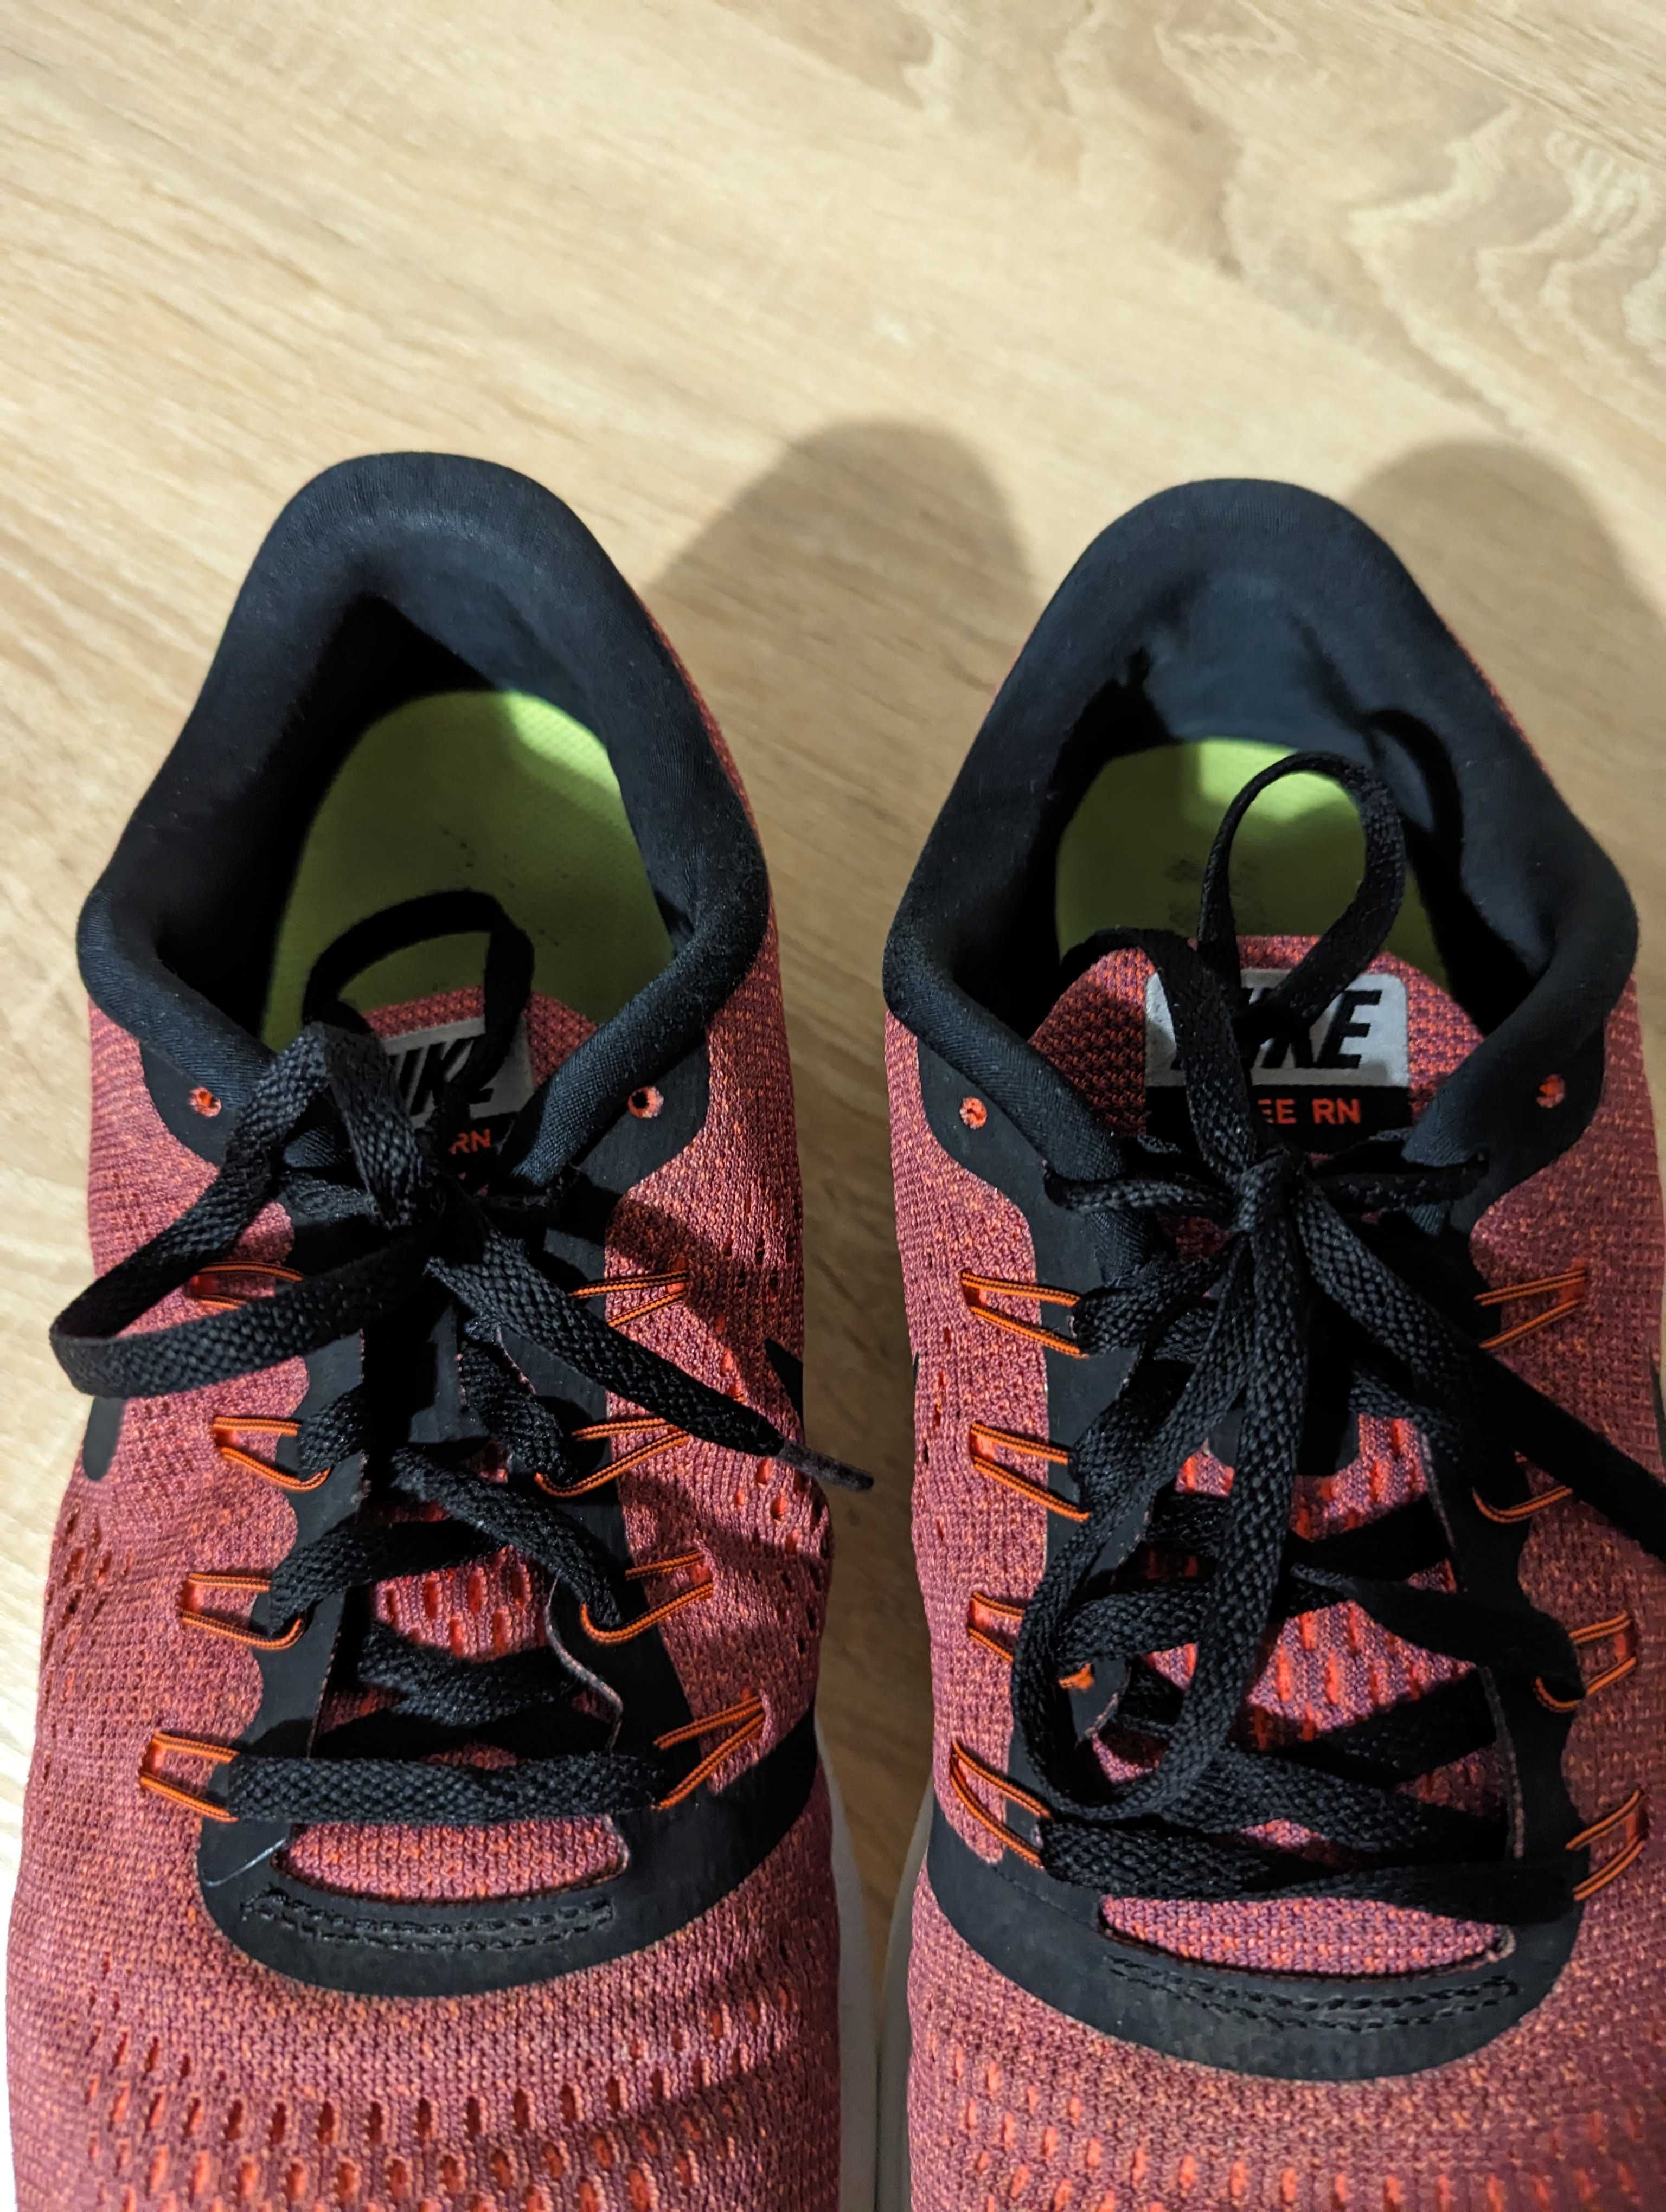 Мужские кроссовки для бега Nike Free Run. 42,5(27)